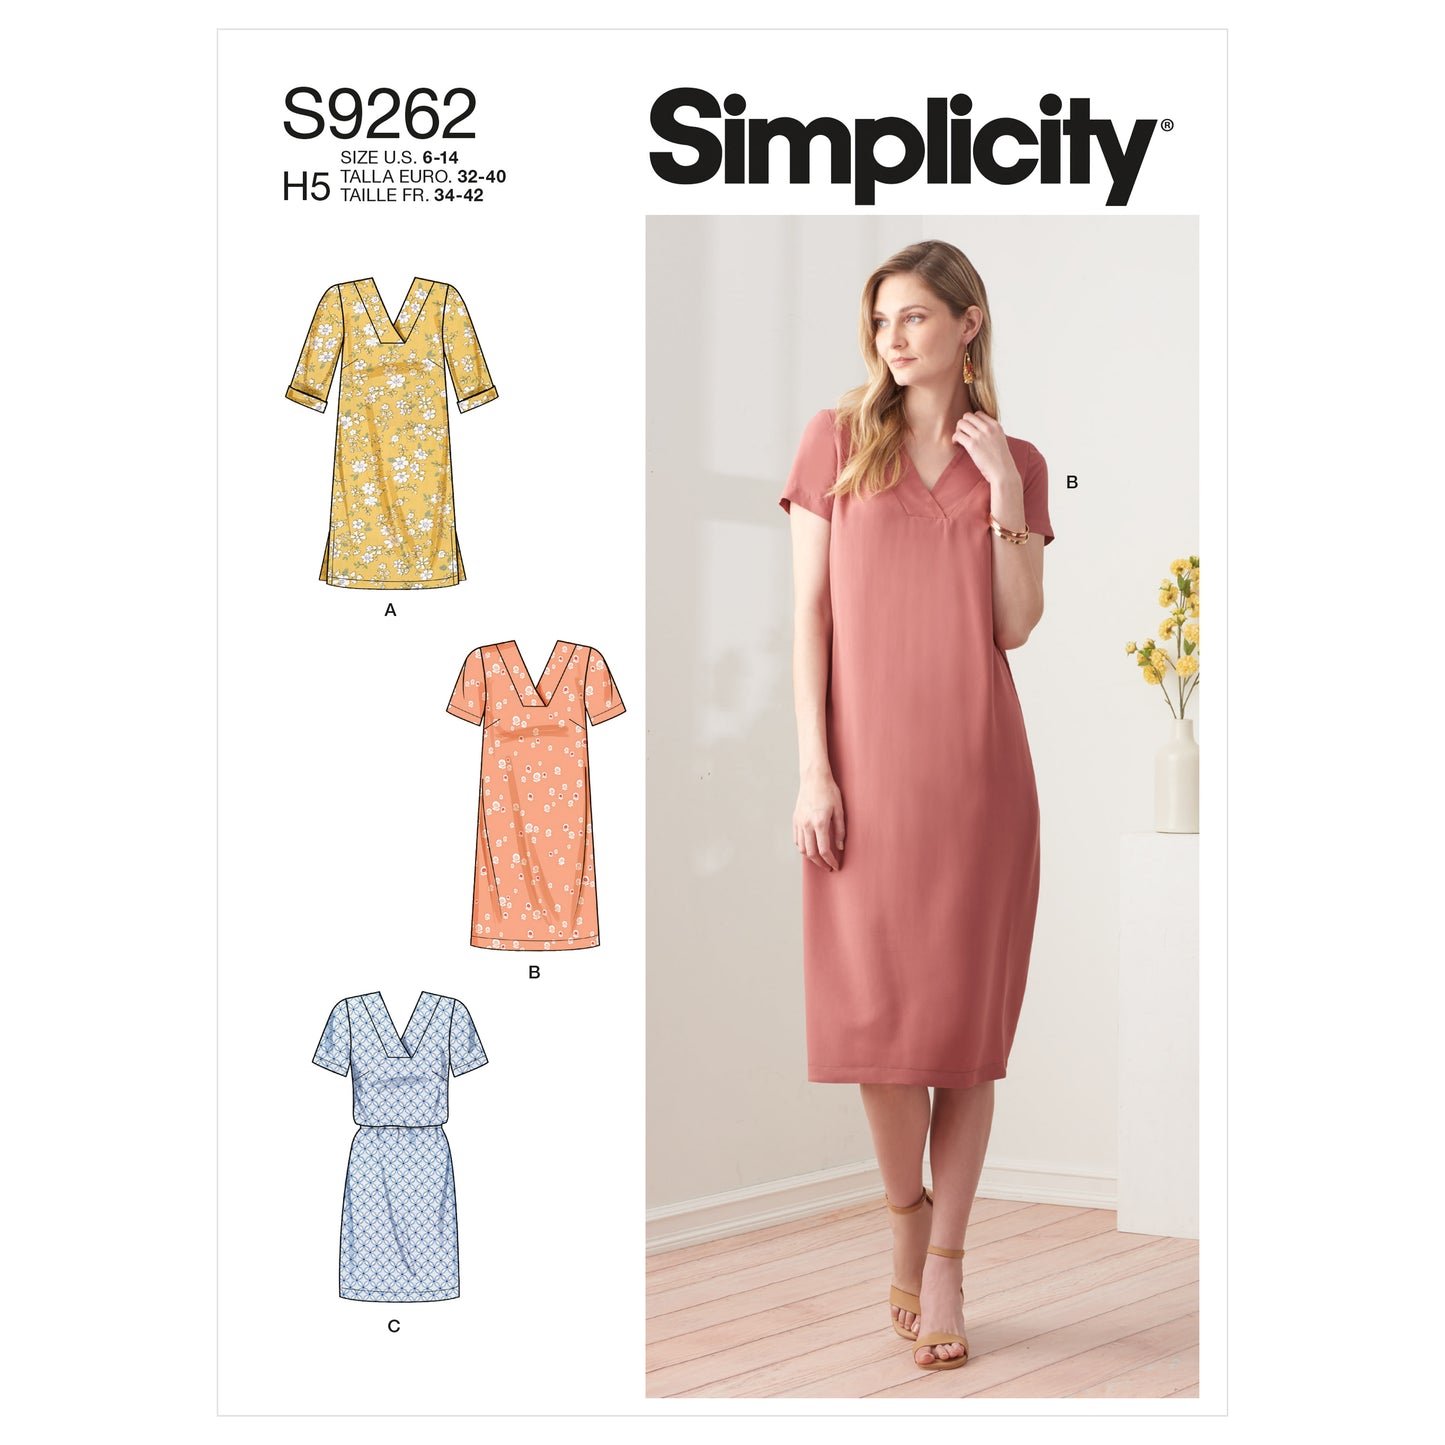 Simplicity 9262